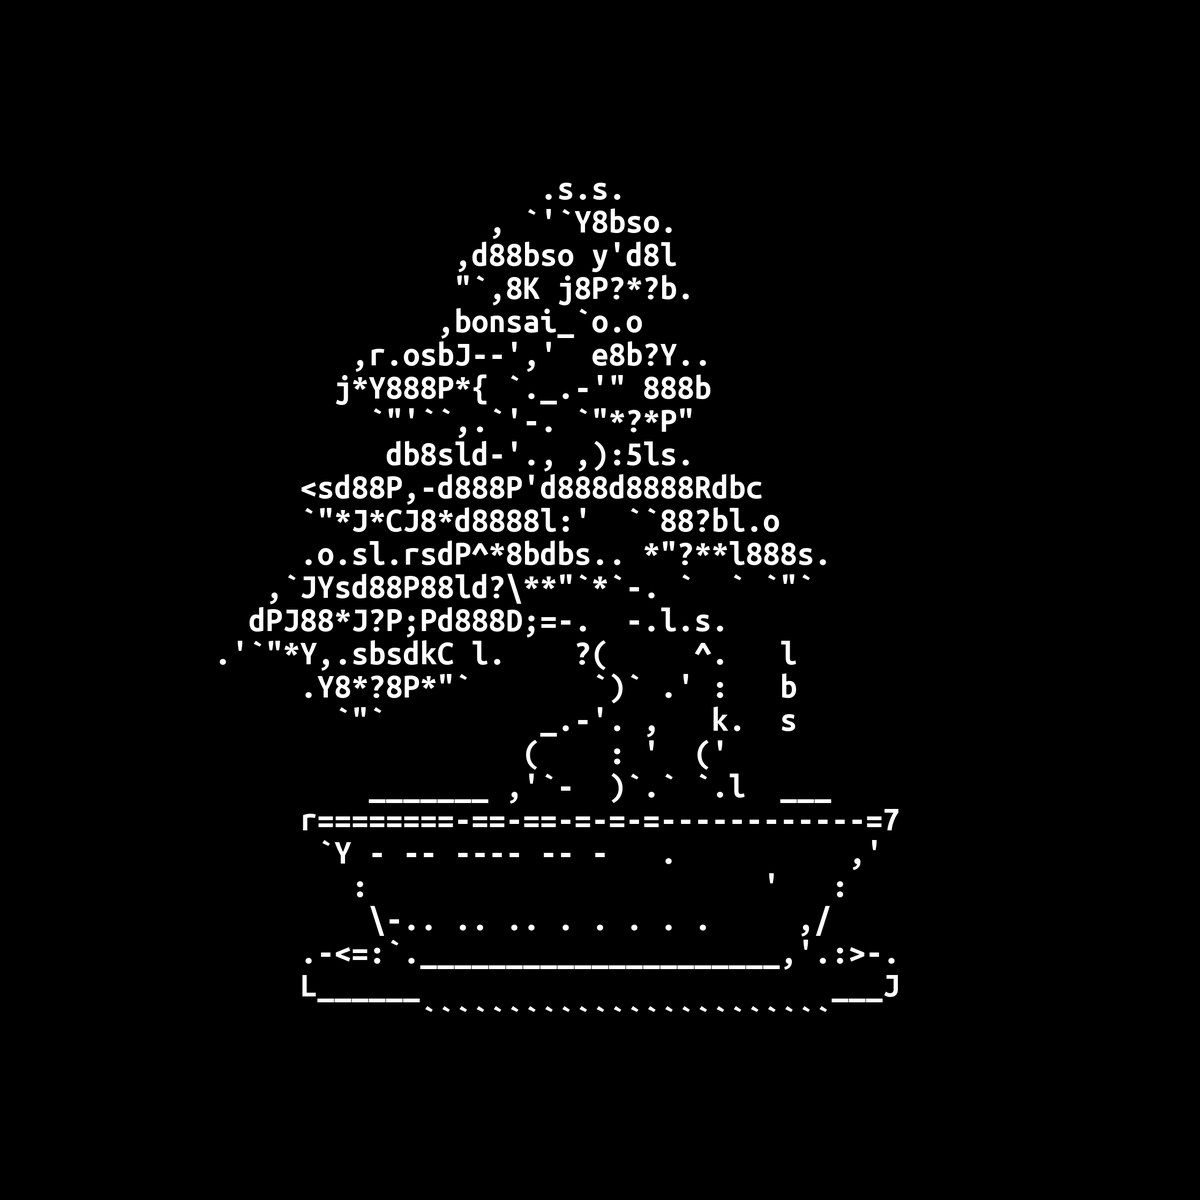 Bonsai

Just a little ASCII practice

#art #ascii #asciiart #bbs #computer #computerart #demoscene #digital #digitalart #retro #retroart #text #textart #textmode #textpunk #8bit #8bitart #bonsai #bonsaiart #plant #plants #japanese